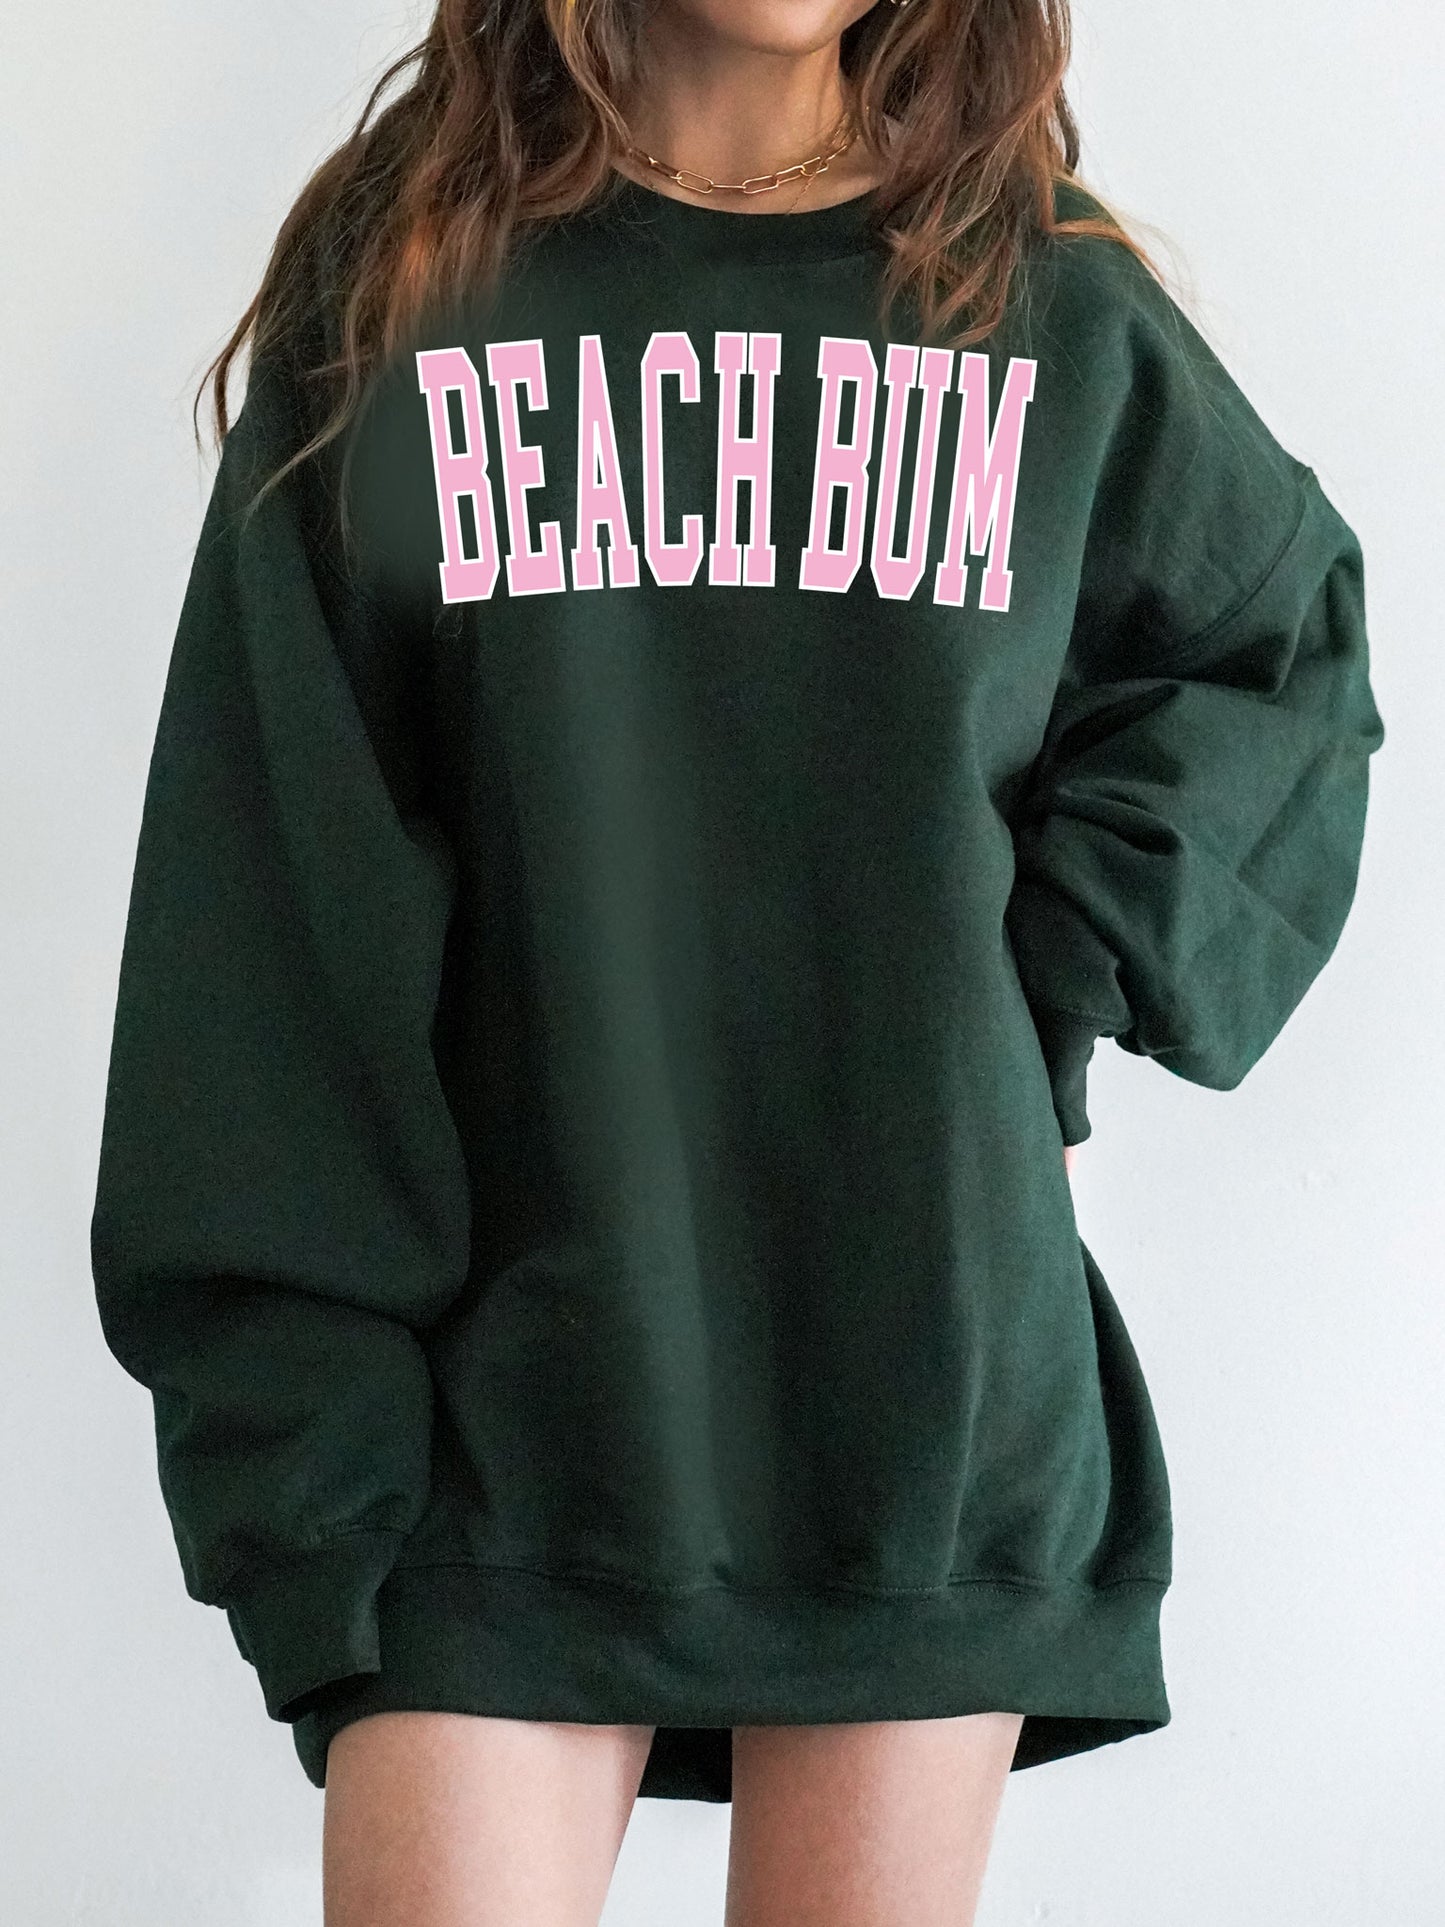 Beach Bum Sweatshirt - Pink Ink